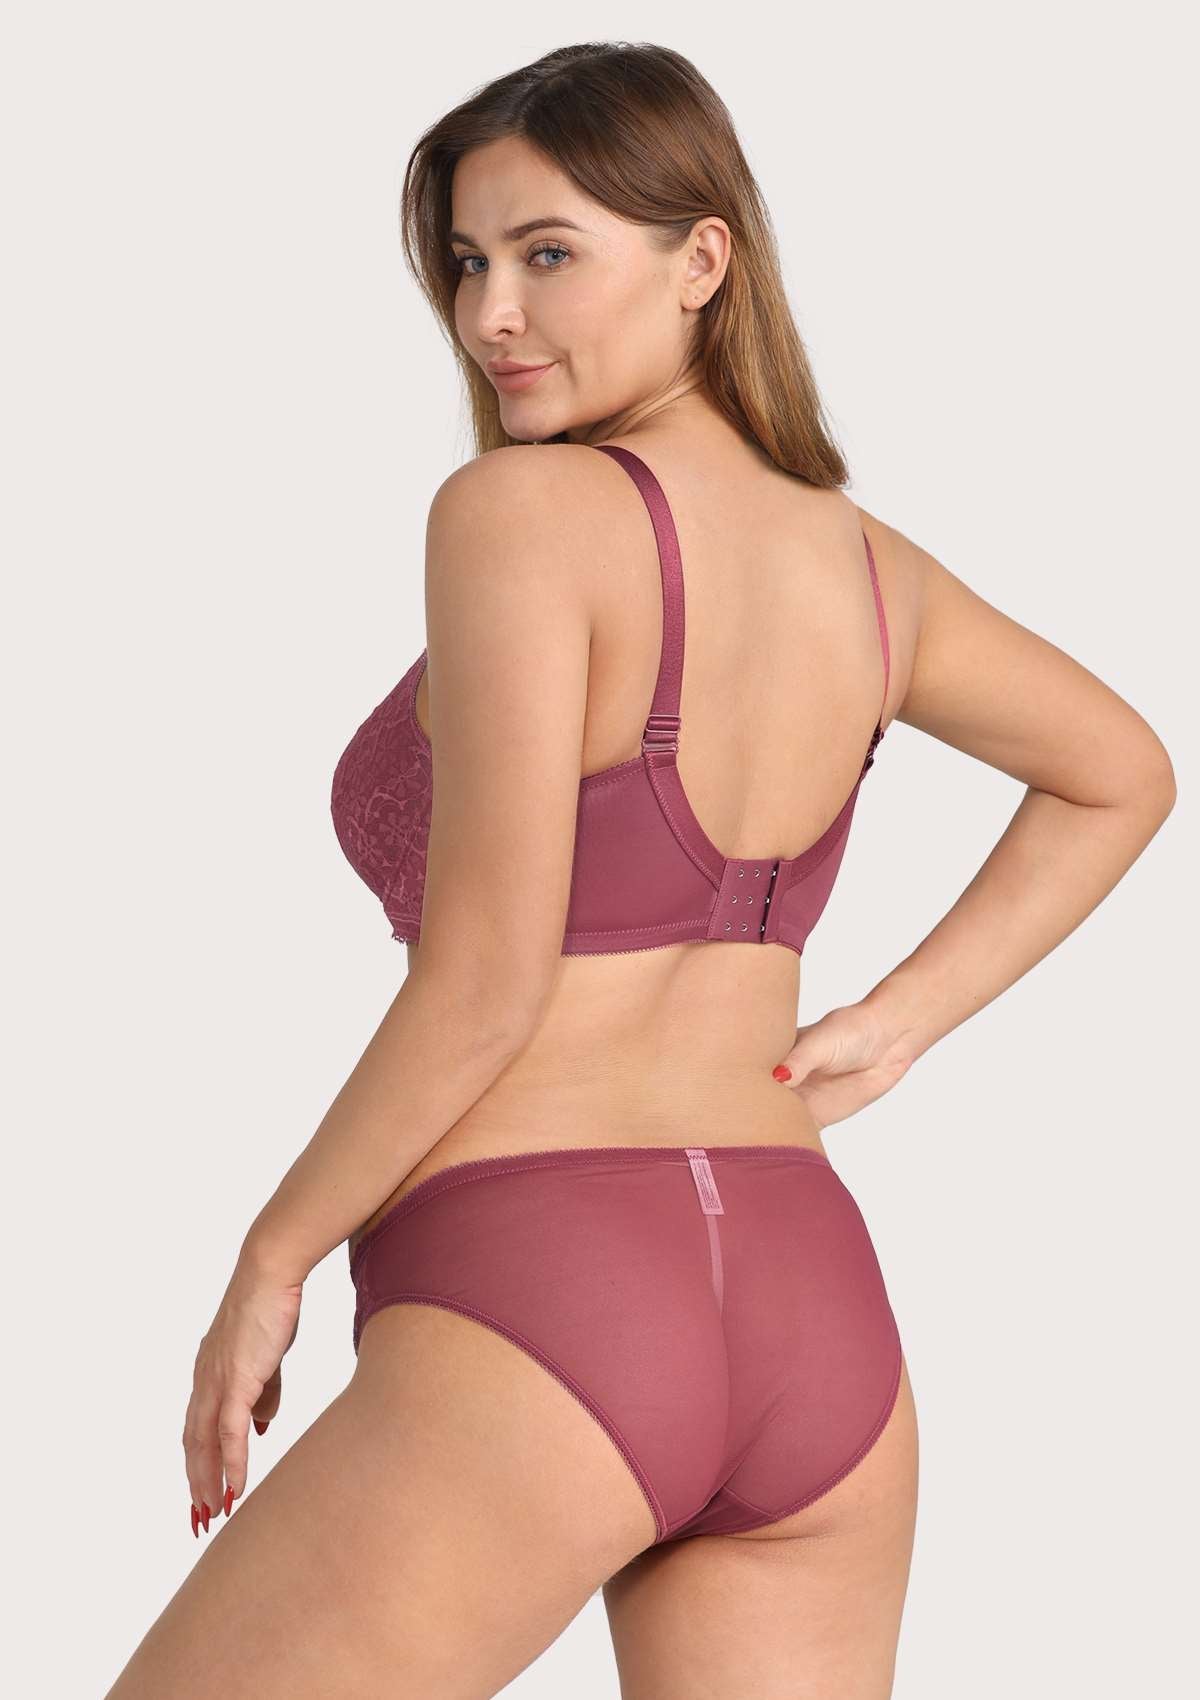 HSIA Anemone Sexy Lace Bra Panty Set: Thick Strap Bra - Burgundy / 42 / D